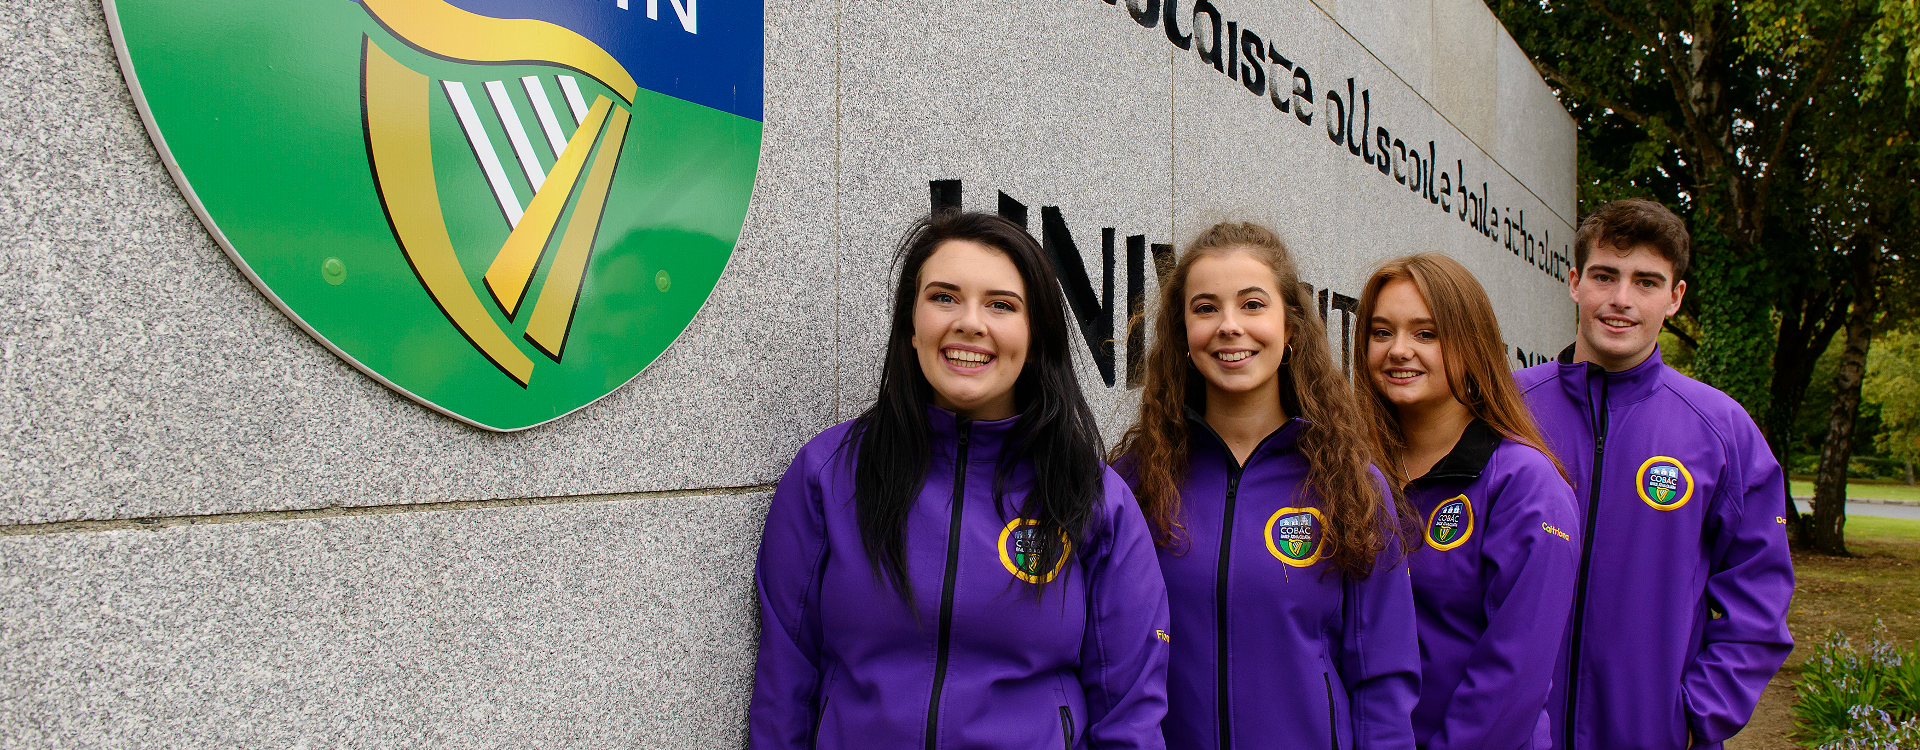 Gaeltacht UCD students standing beside the UCD logo